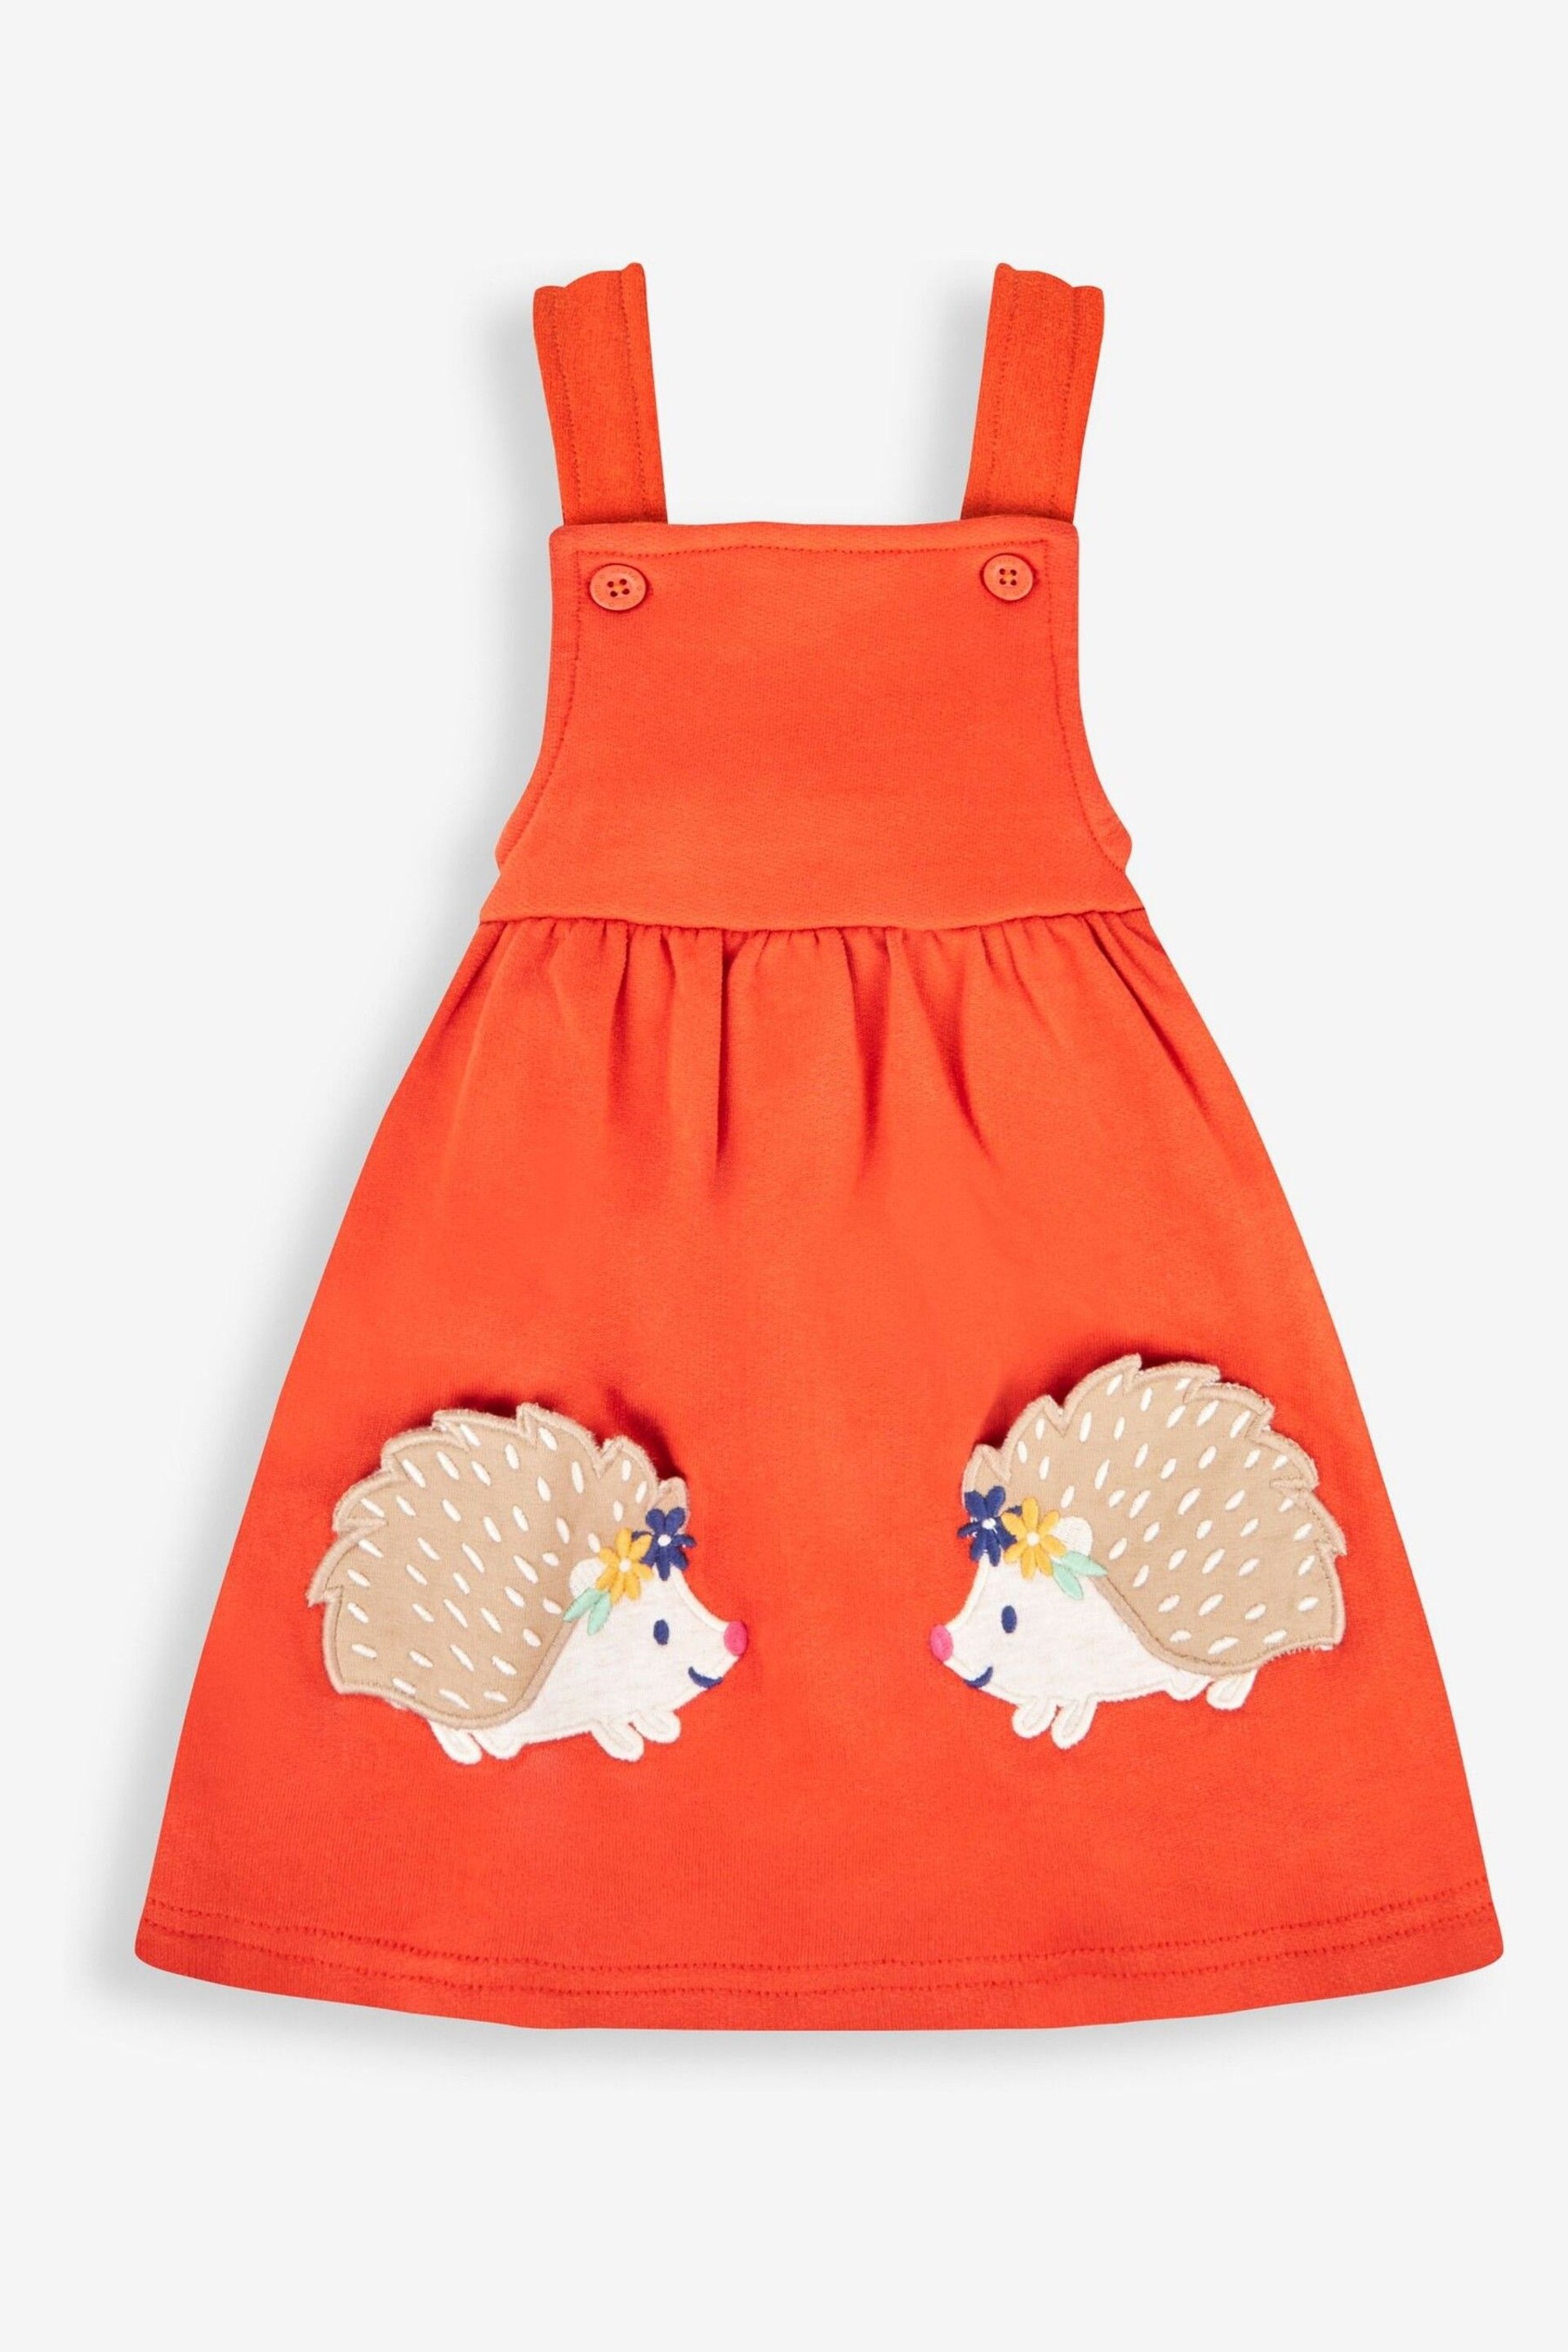 JoJo Maman Bébé Rust Orange Hedgehog Girls' 2-Piece Appliqué Pinafore Dress & Top Set - Image 2 of 6